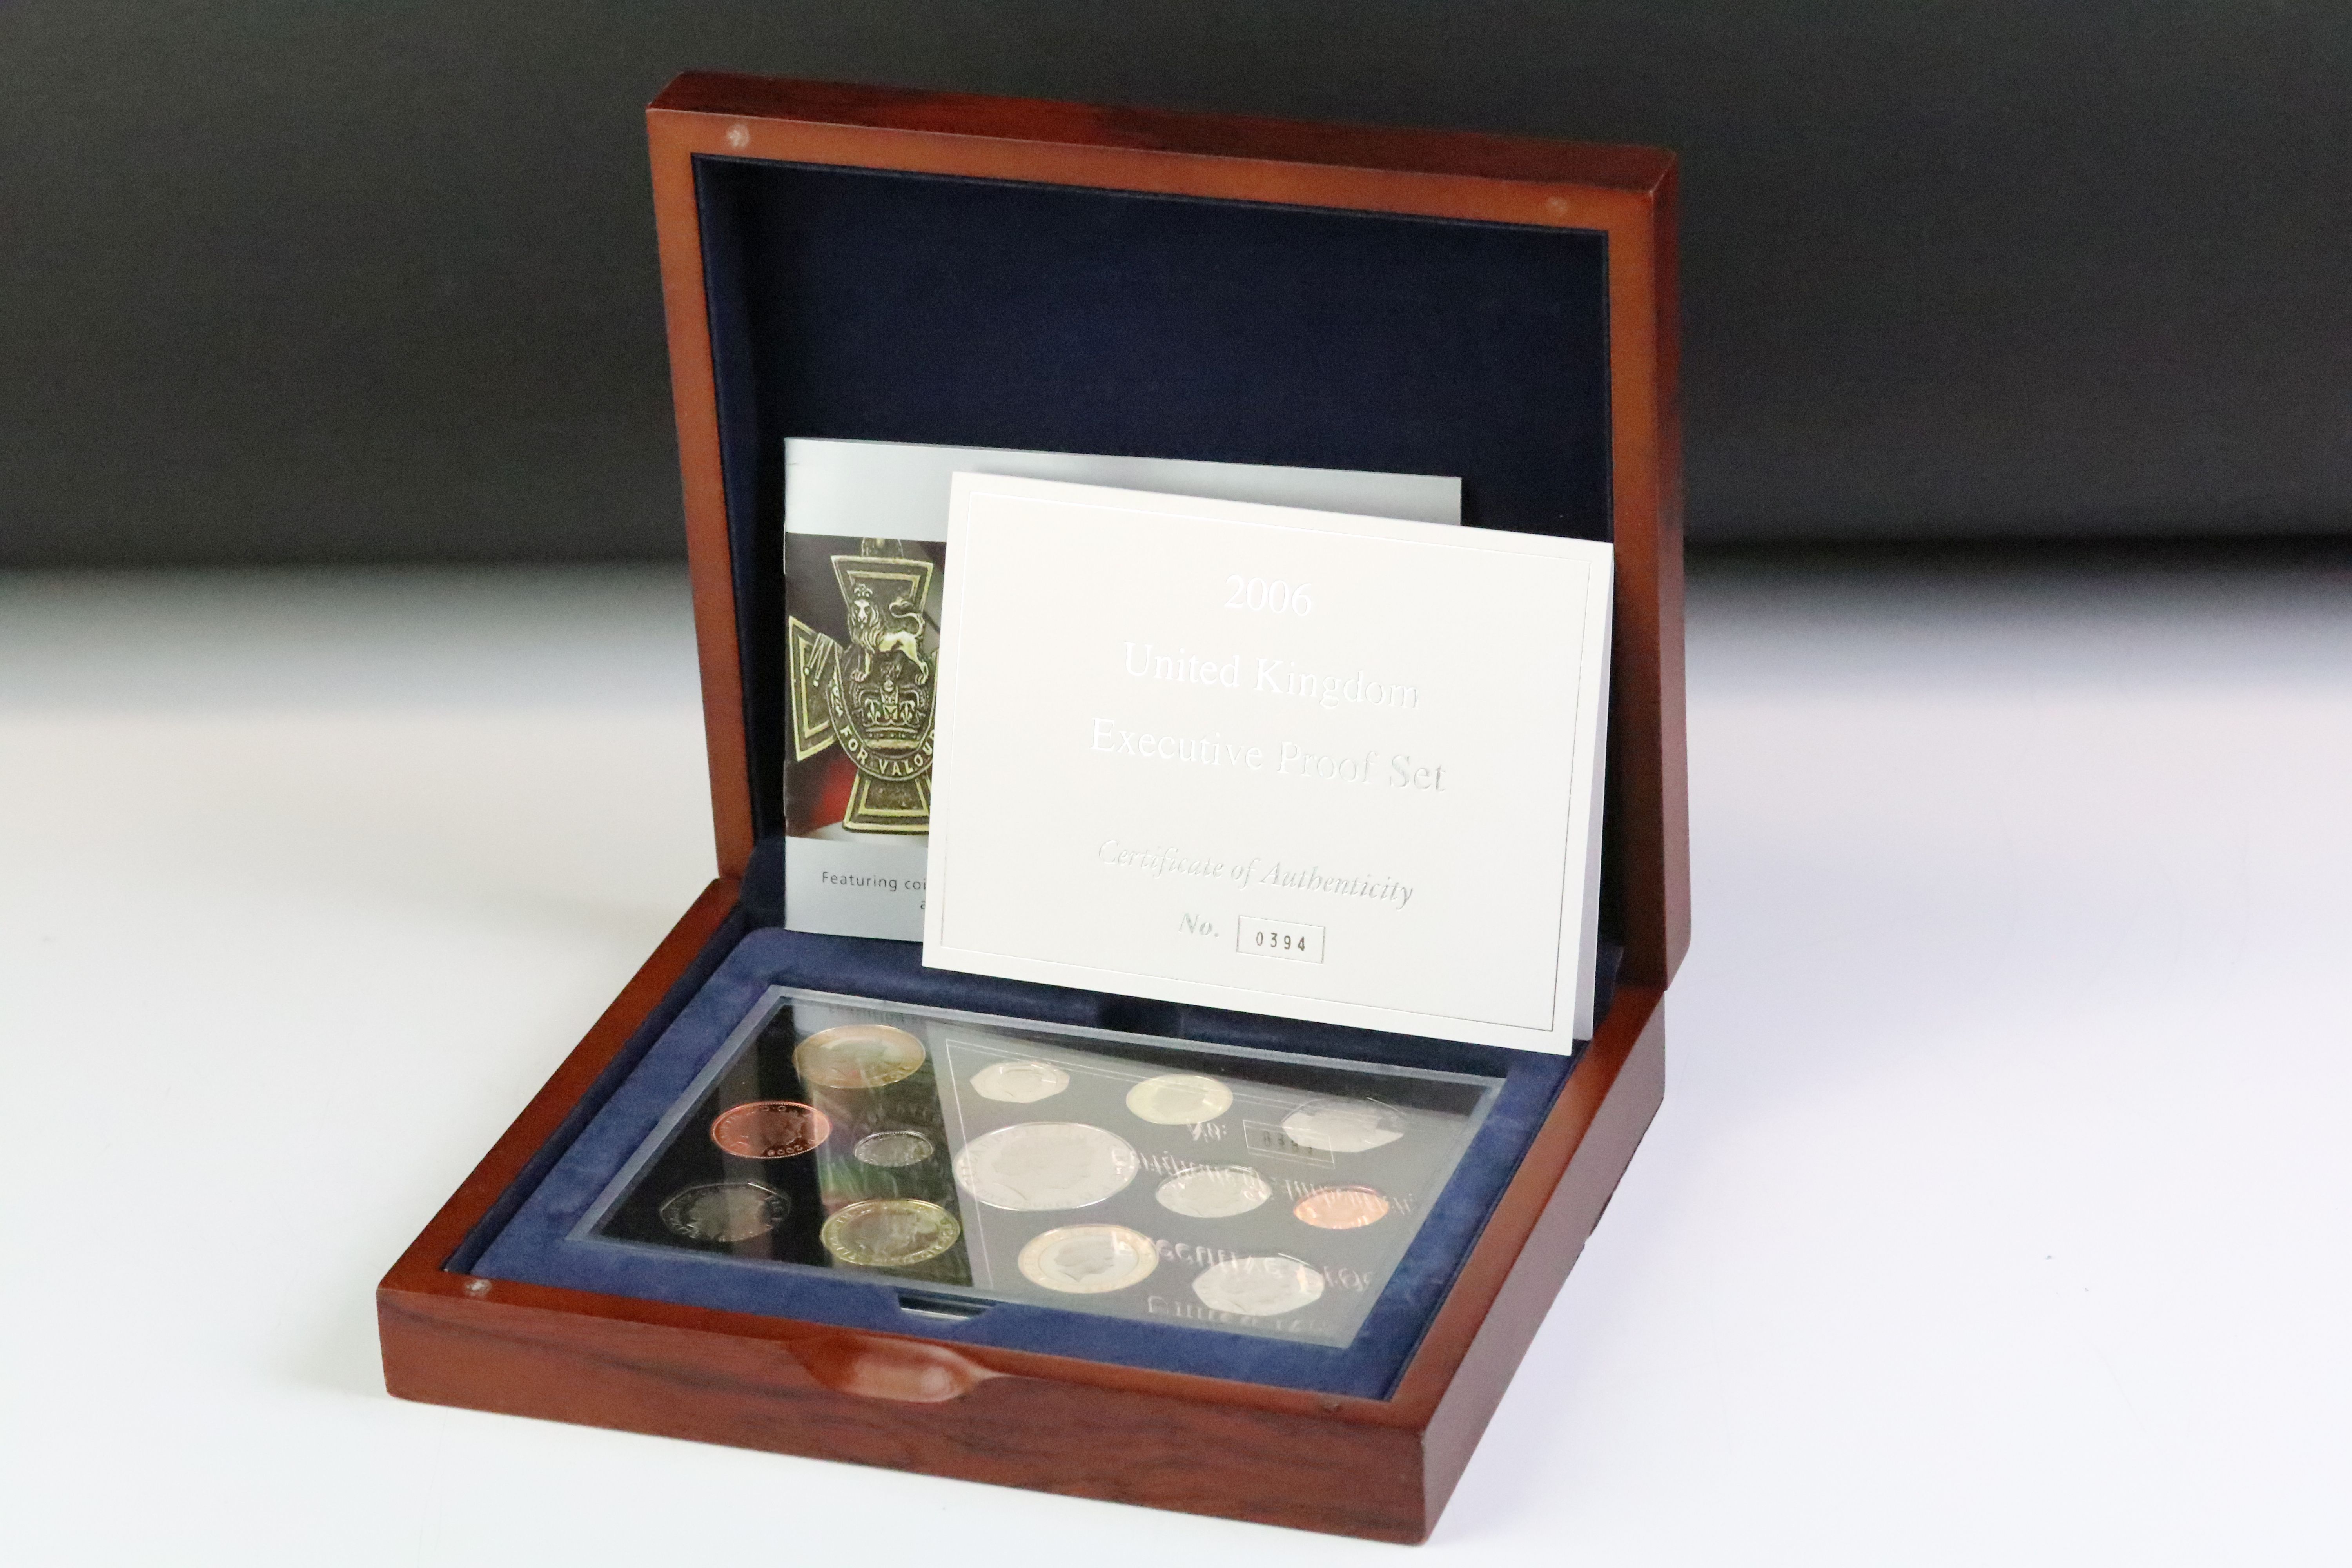 A Royal Mint United Kingdom 2006 Executive twelve coin proof set, set within wooden presentation